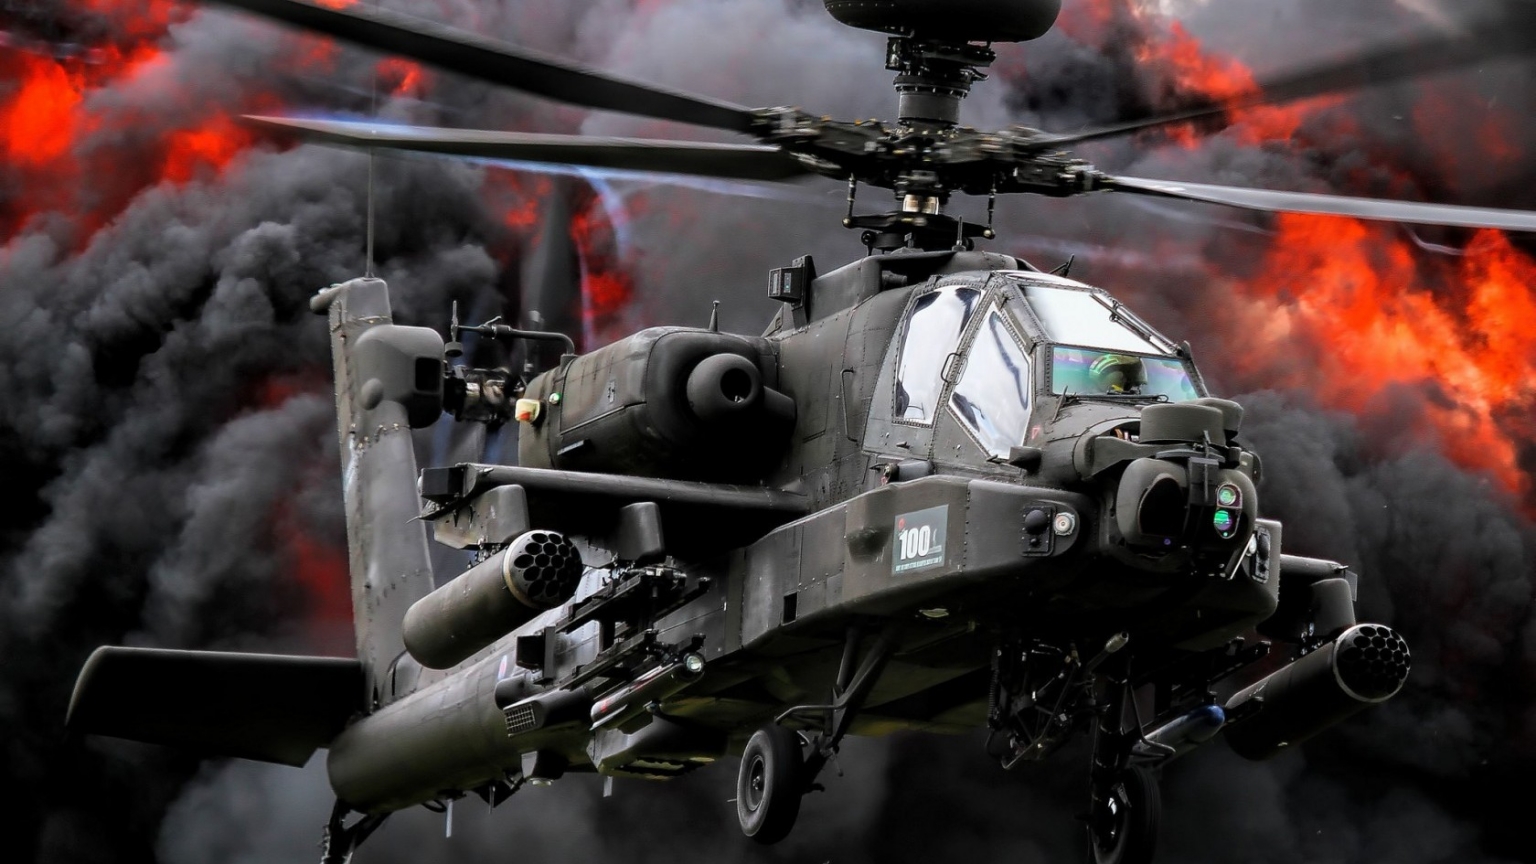 Boeing AH 64 Apache for 1536 x 864 HDTV resolution